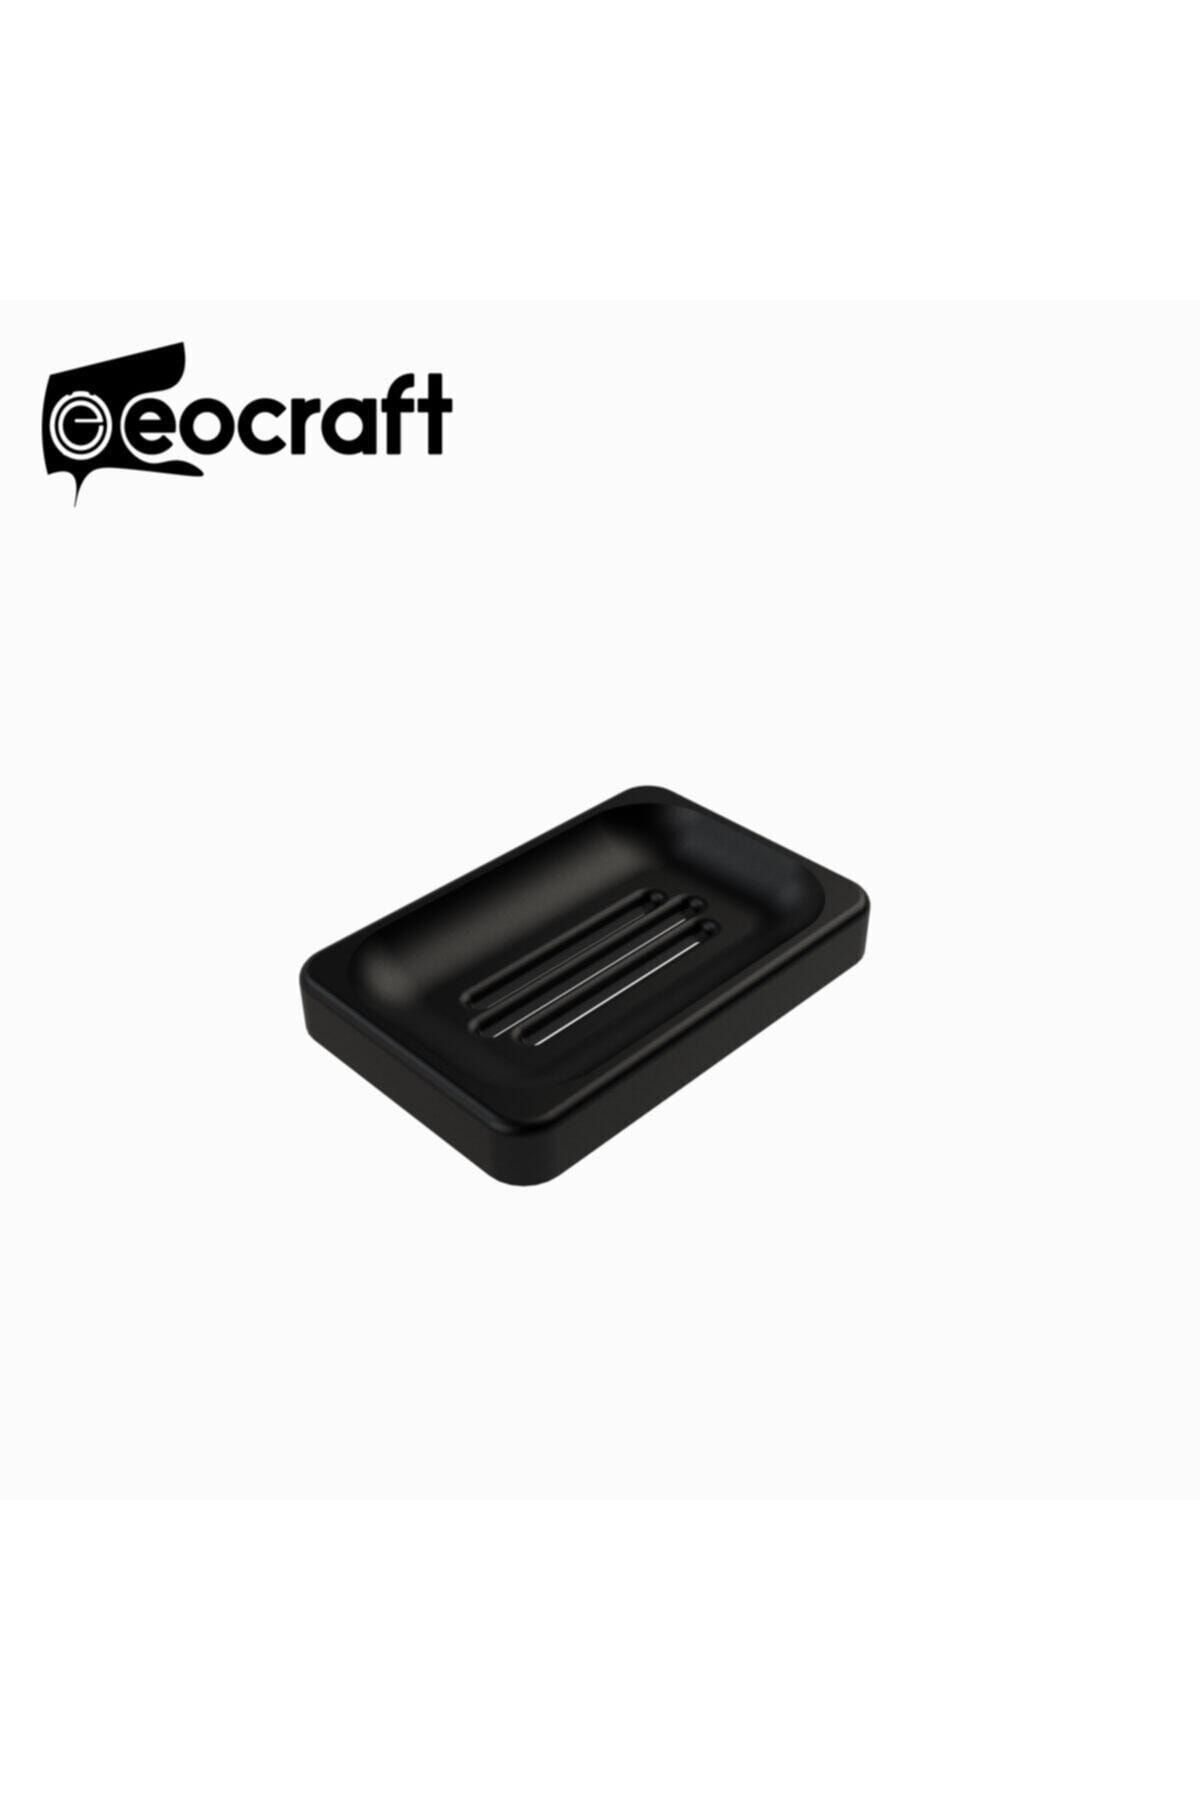 EOCRAFT The Art Box Desıgn Ahıtoba Kompozit Granit Katı Sabunluk Siyah